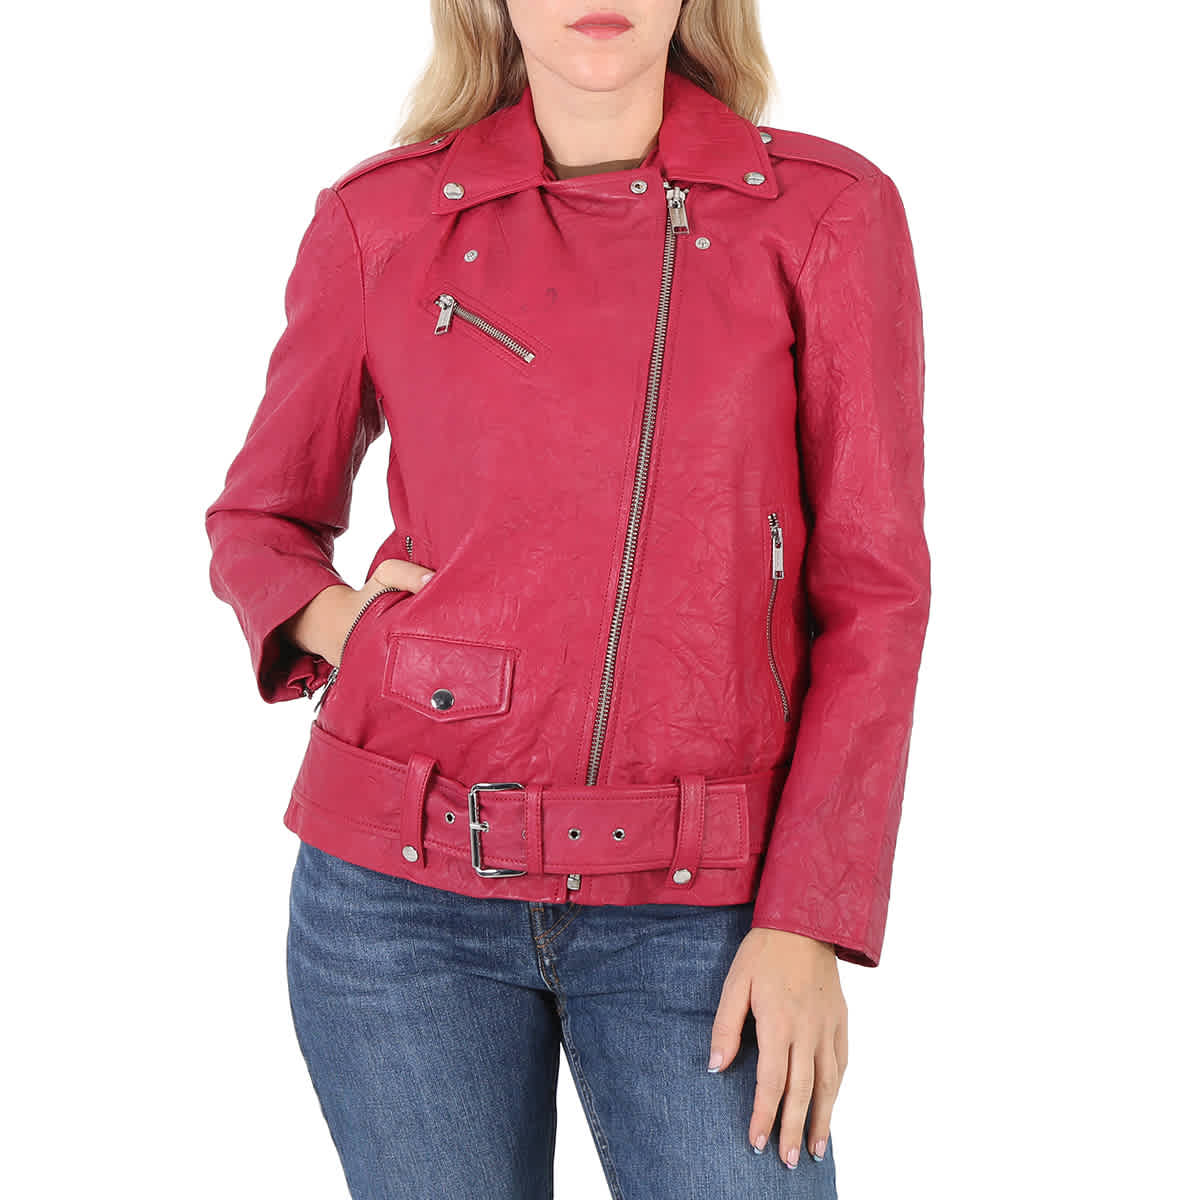 Michael Kors Ladies Crinkled Leather Moto Jacket, Size Large - image 1 of 1